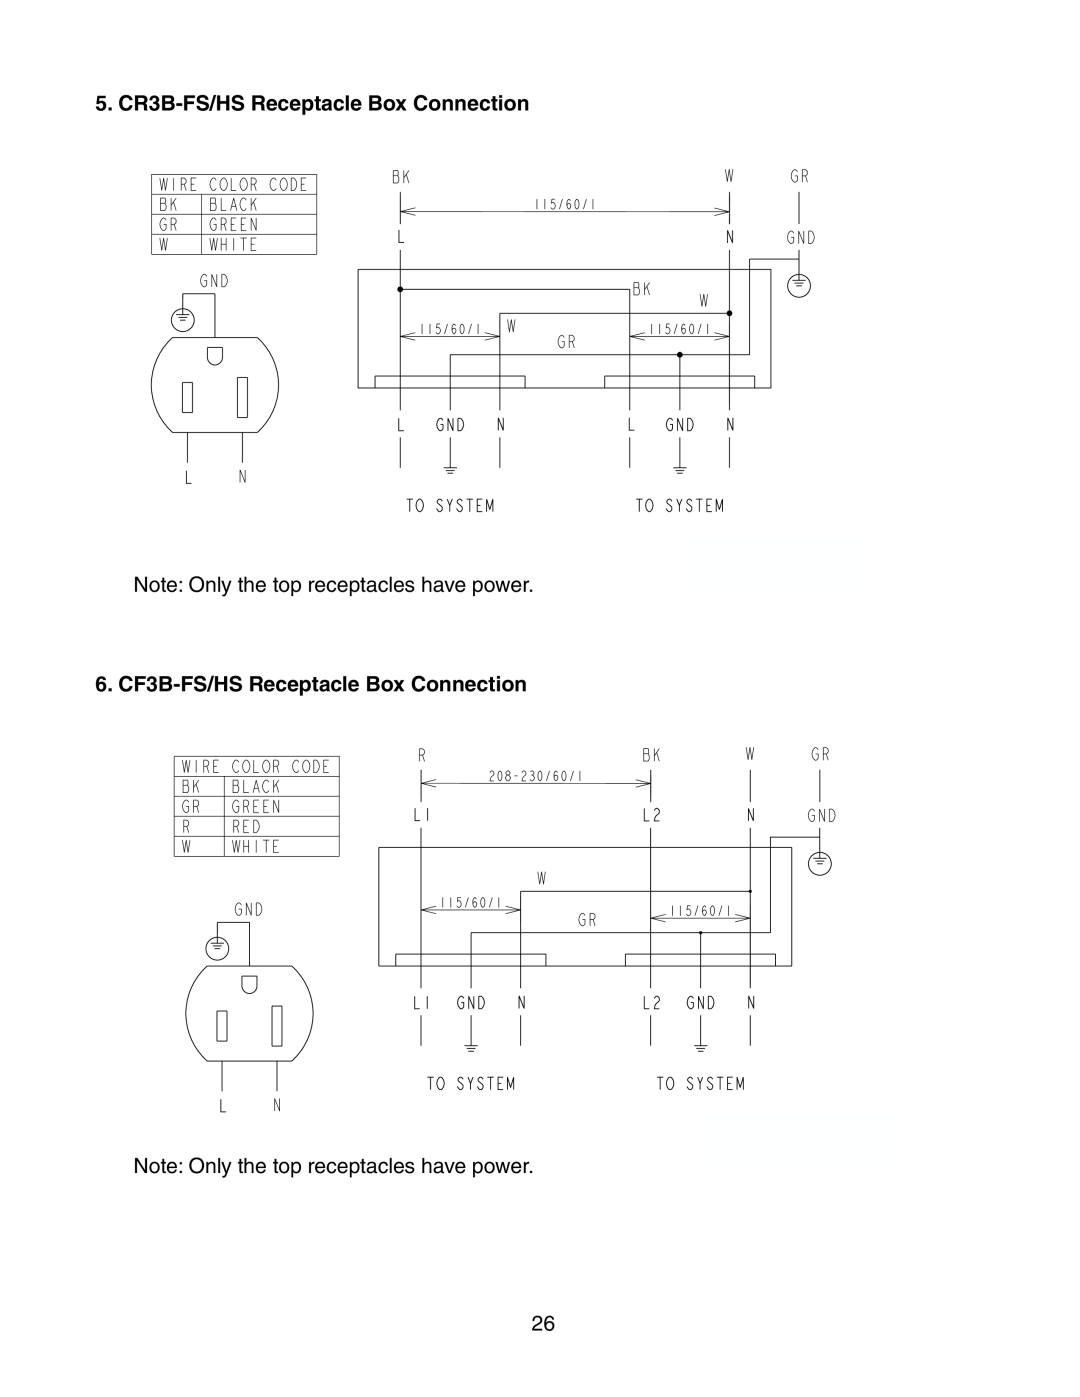 Hoshizaki 73183 service manual 5. CR3B-FS/HS Receptacle Box Connection, 6. CF3B-FS/HS Receptacle Box Connection 